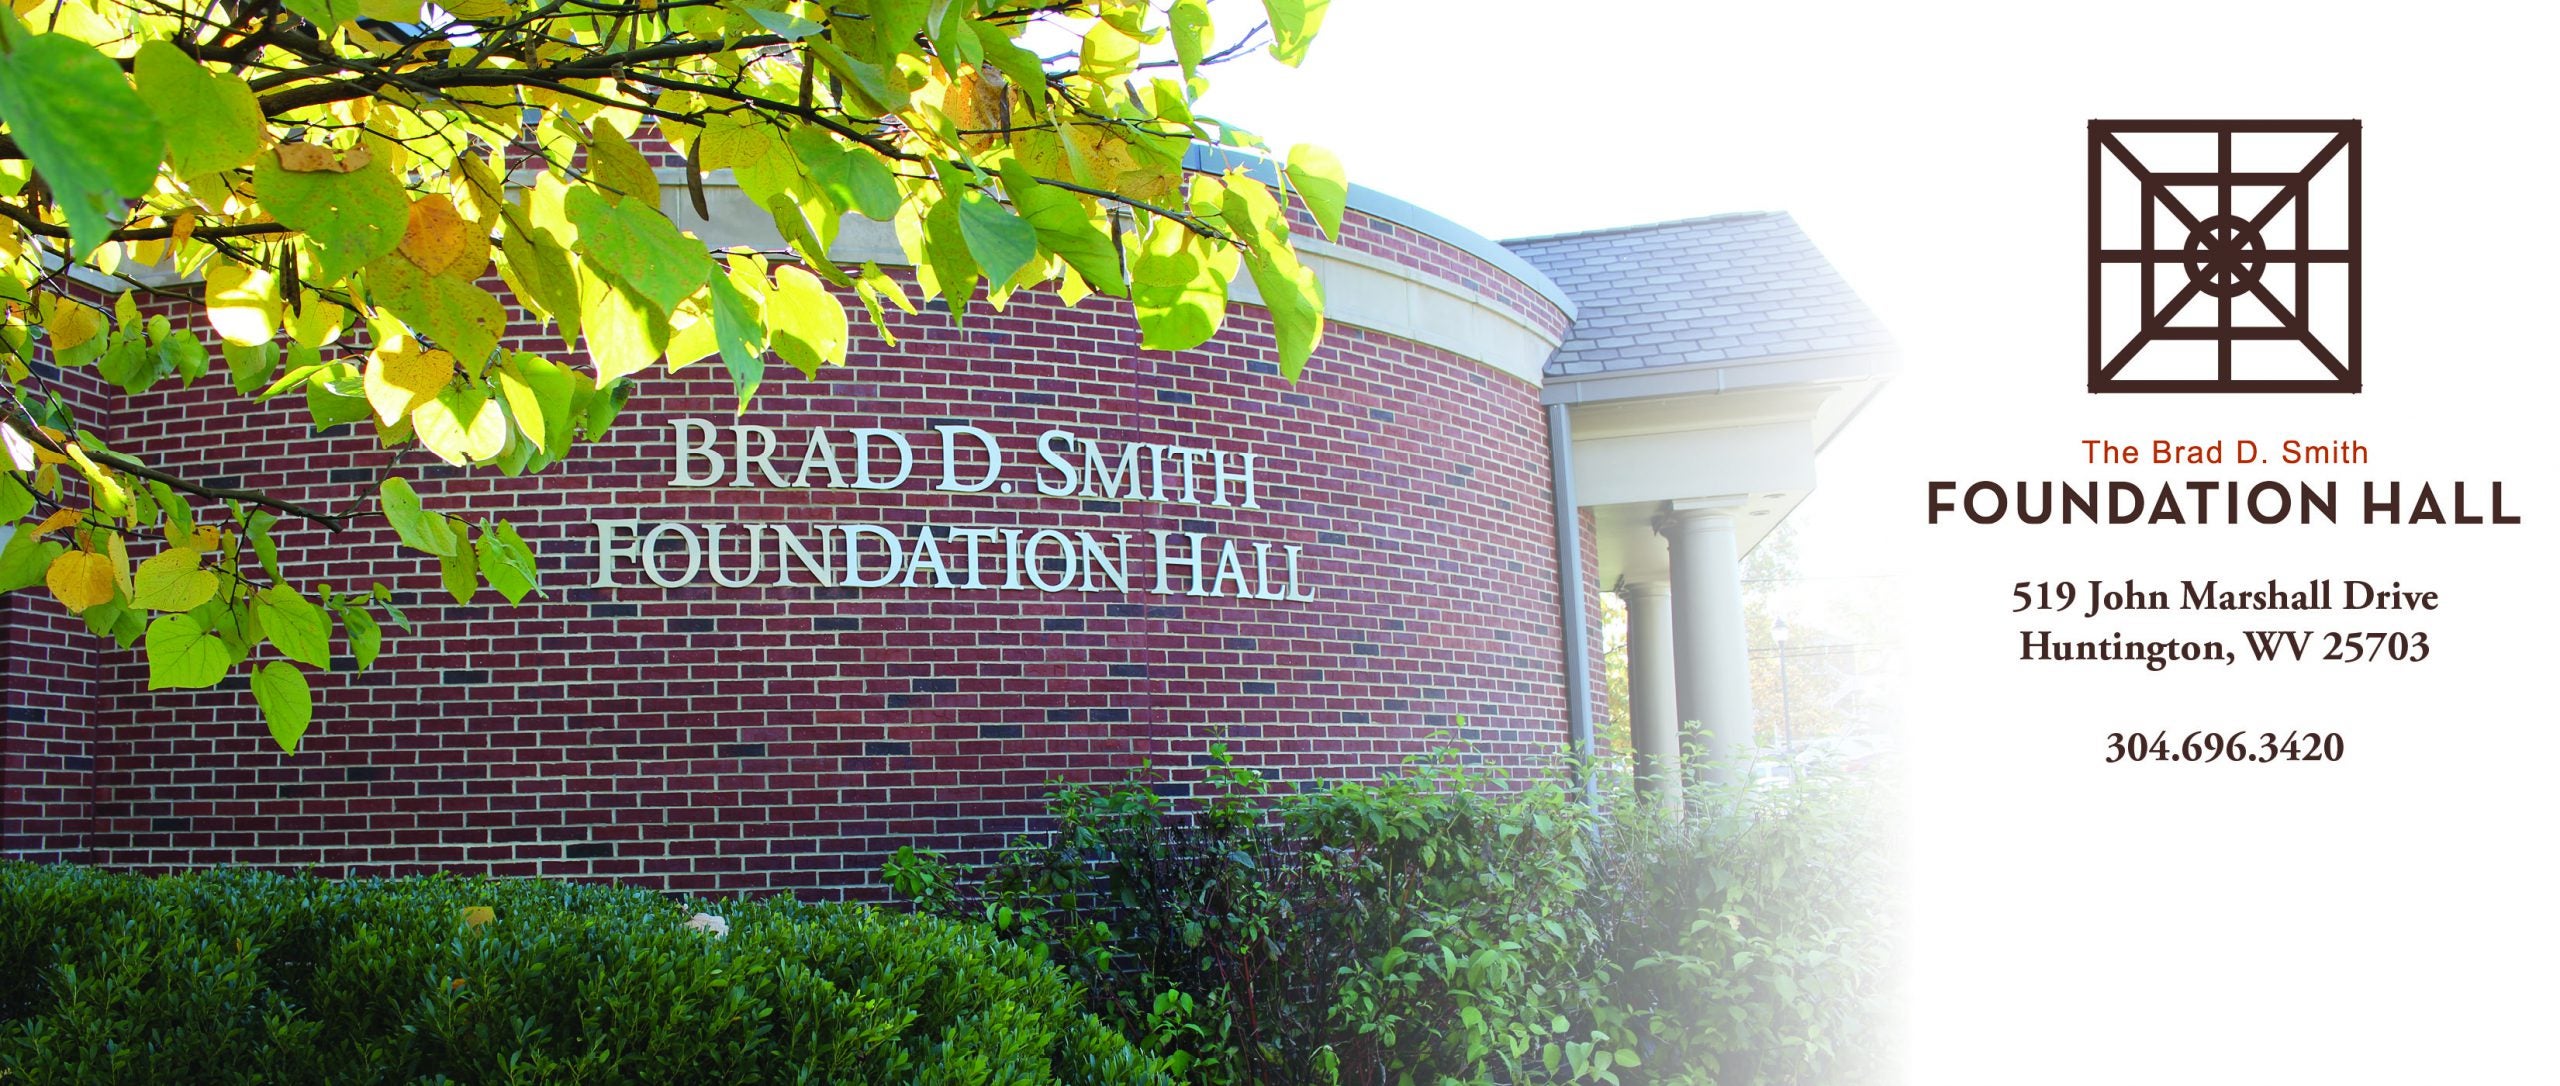 Brad D. Smith Foundation Hall logo